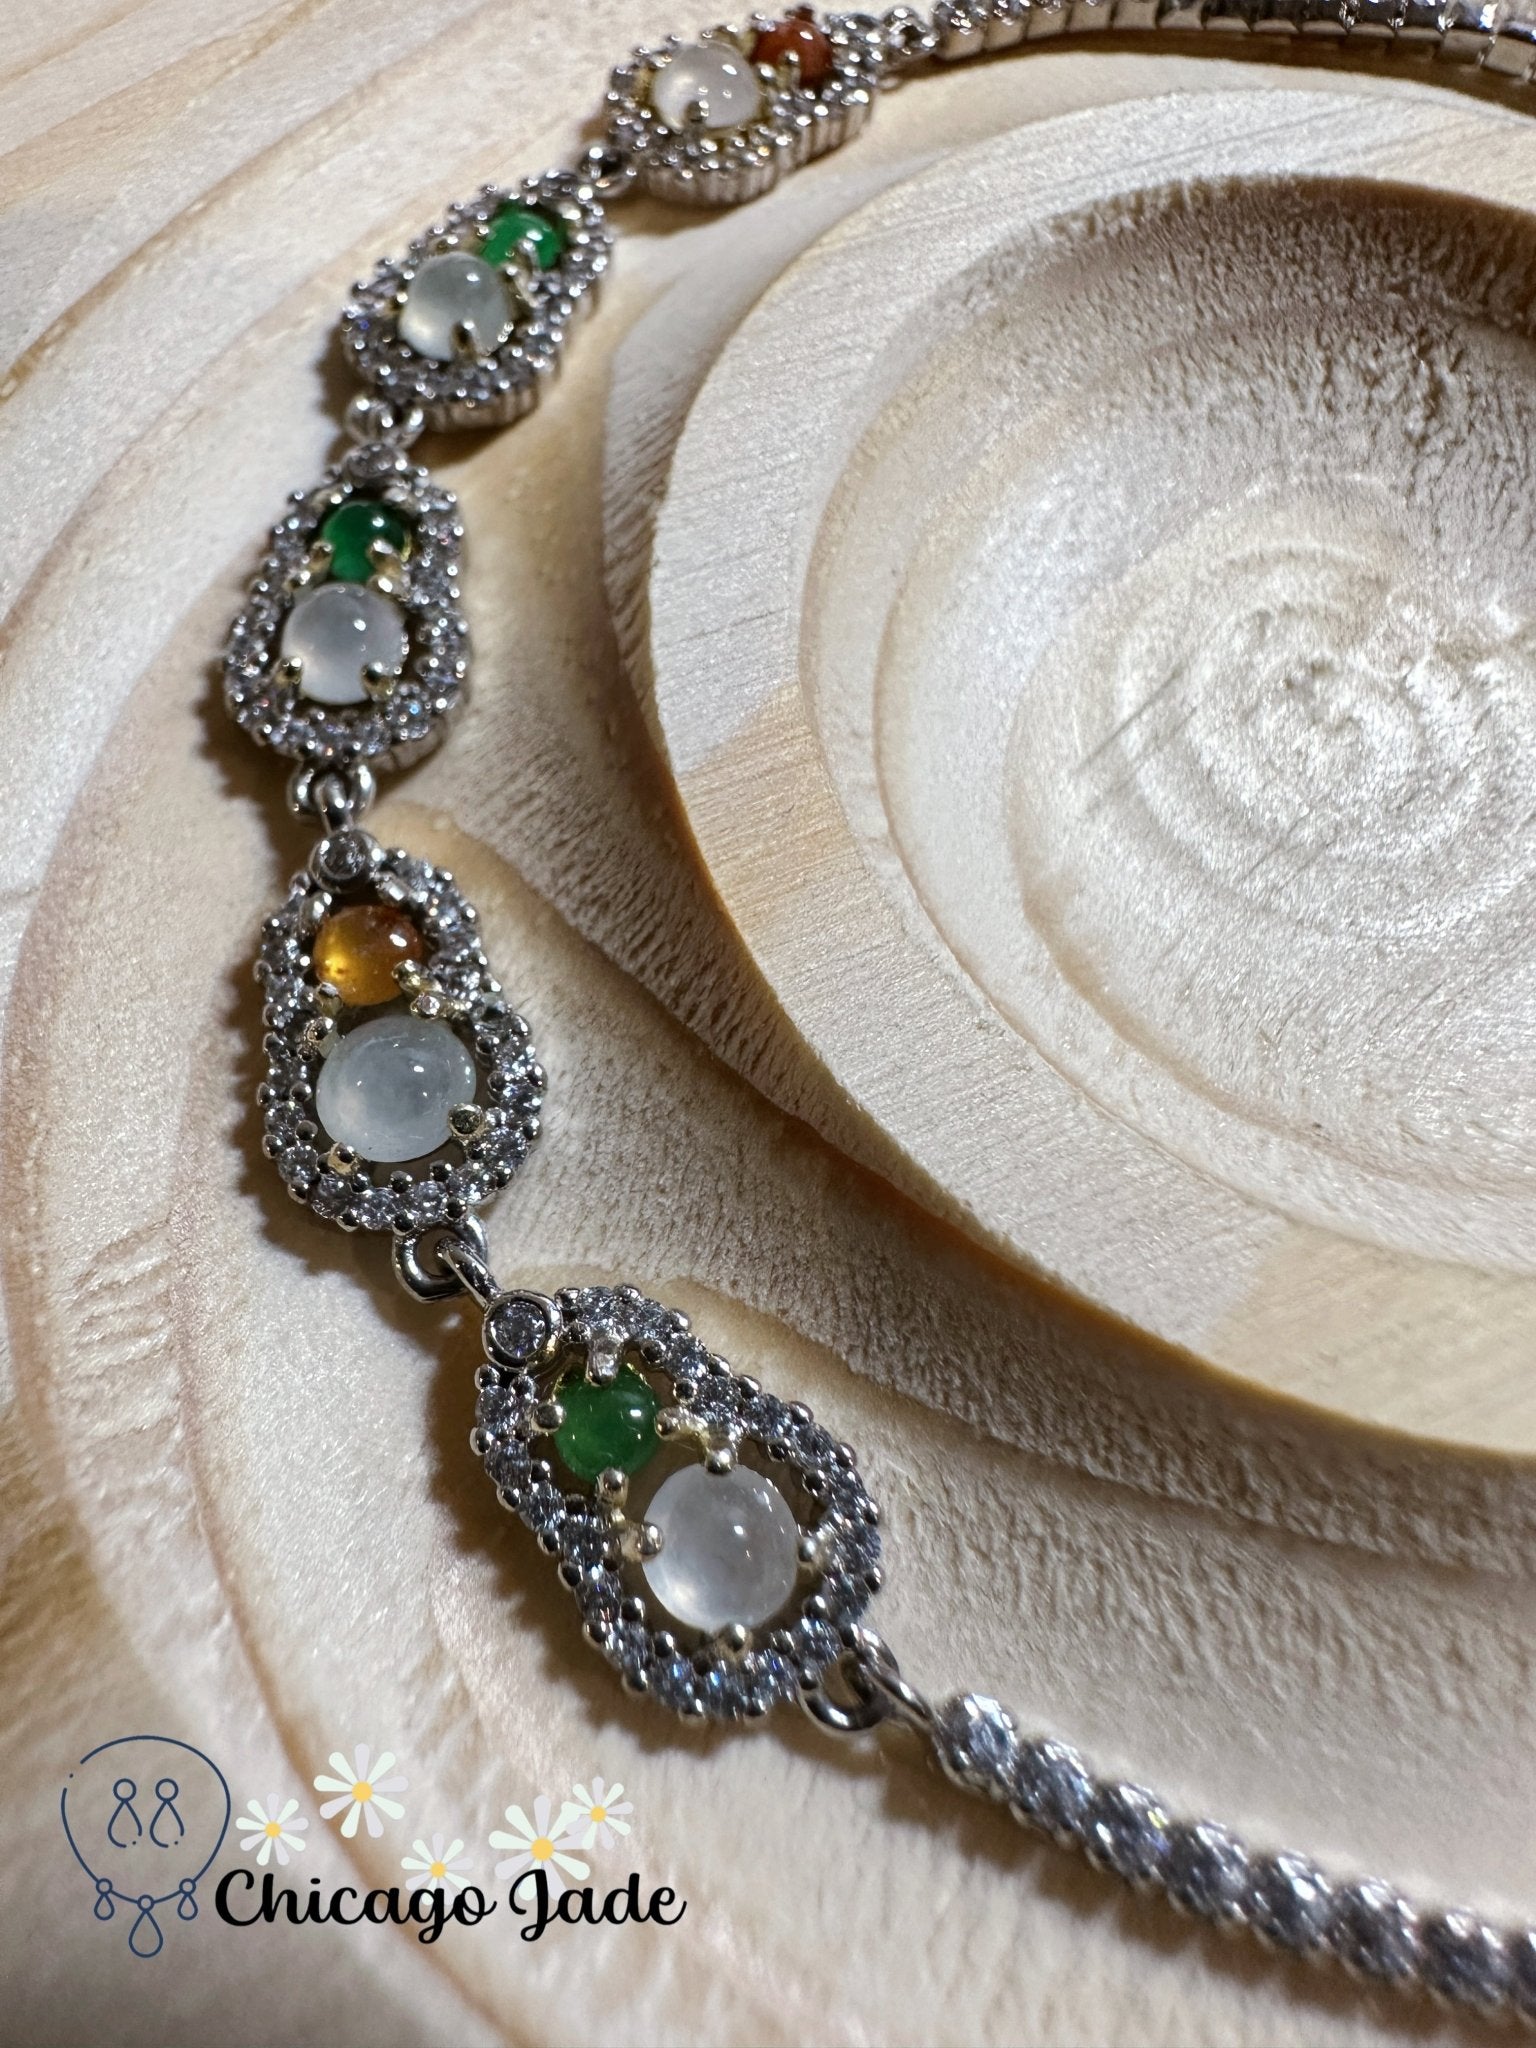 Green, icy and yellow jadeite jade stone on sterling S925 silver bracelet - Chicago Jadeanniversarybeadedbirthday giftChicago Jade